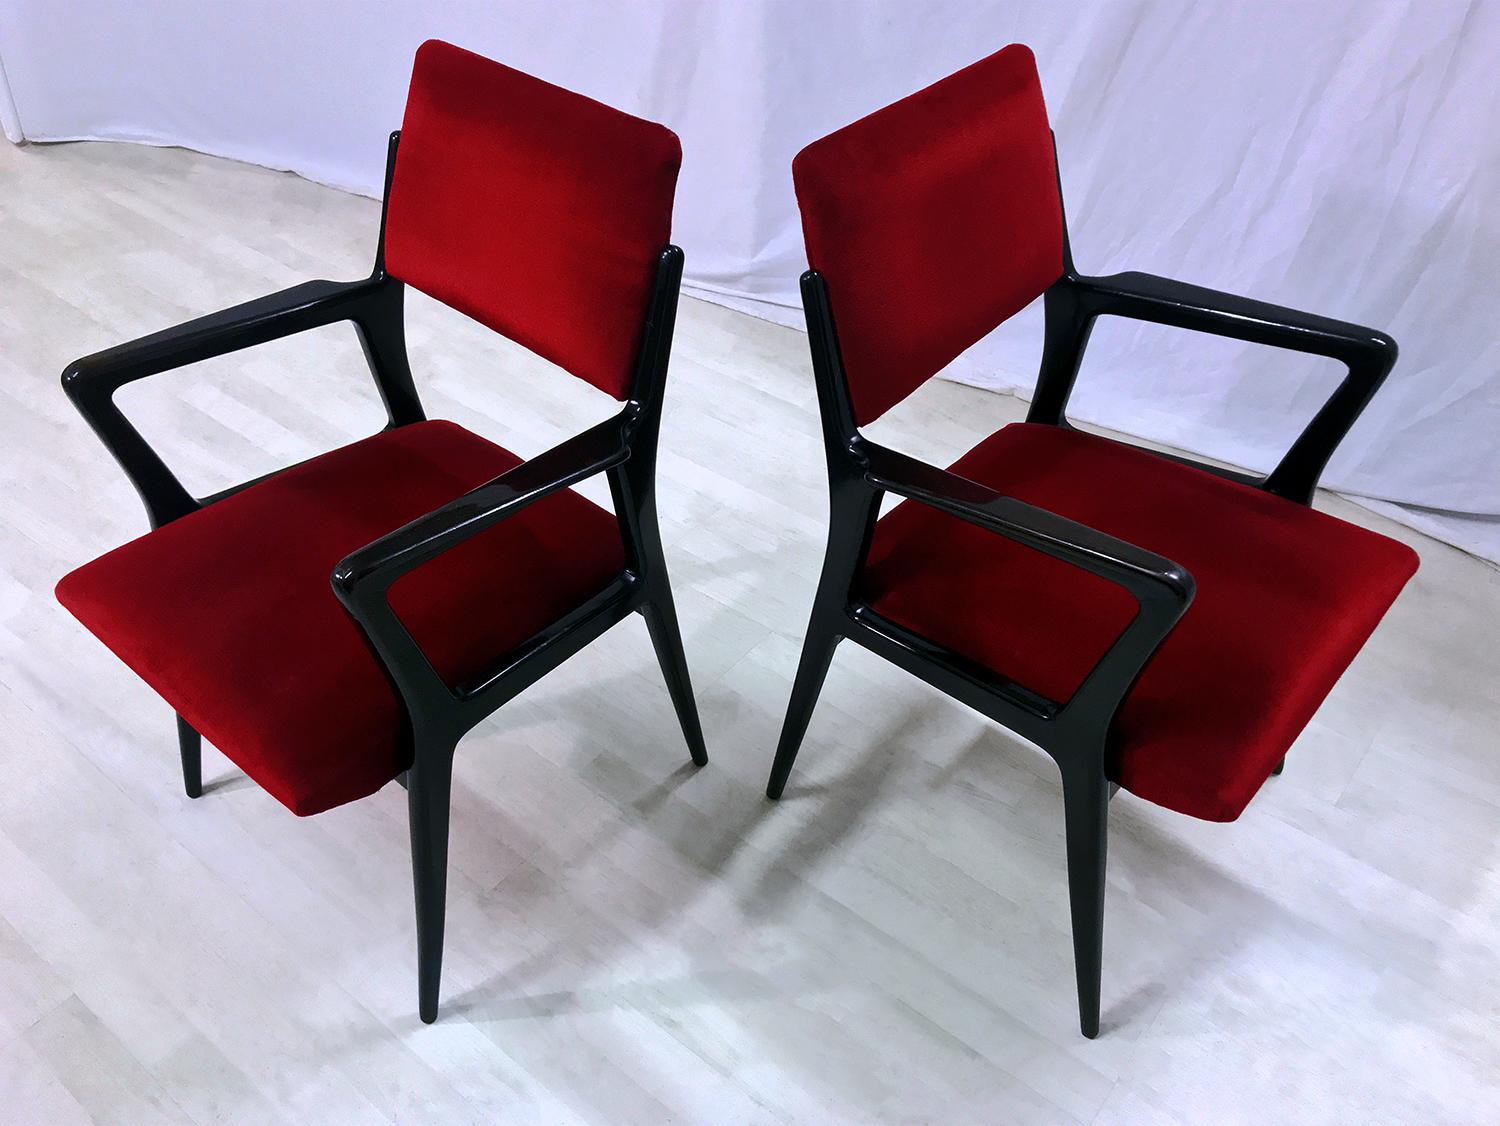 20th Century Pair of Italian Mid-Century Scarlet Red Velvet Armchairs, 1950s For Sale